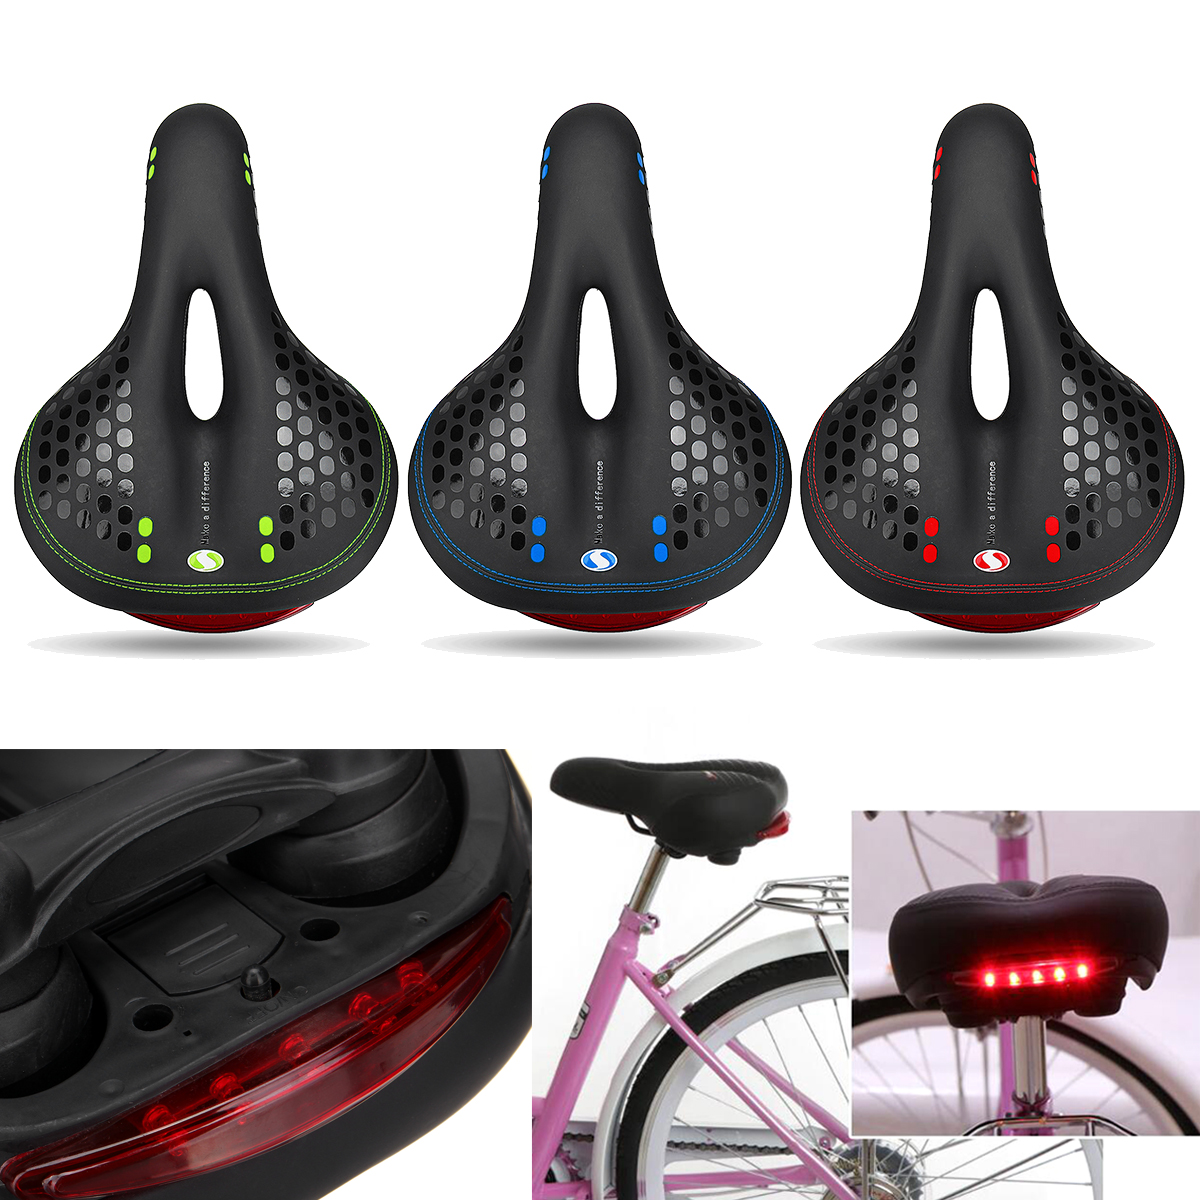 

BIKIGHT Bike Bicycle Saddle Soft Breathable Waterproof Cushion Ergonomic With Taillight MTB Cycling Seat